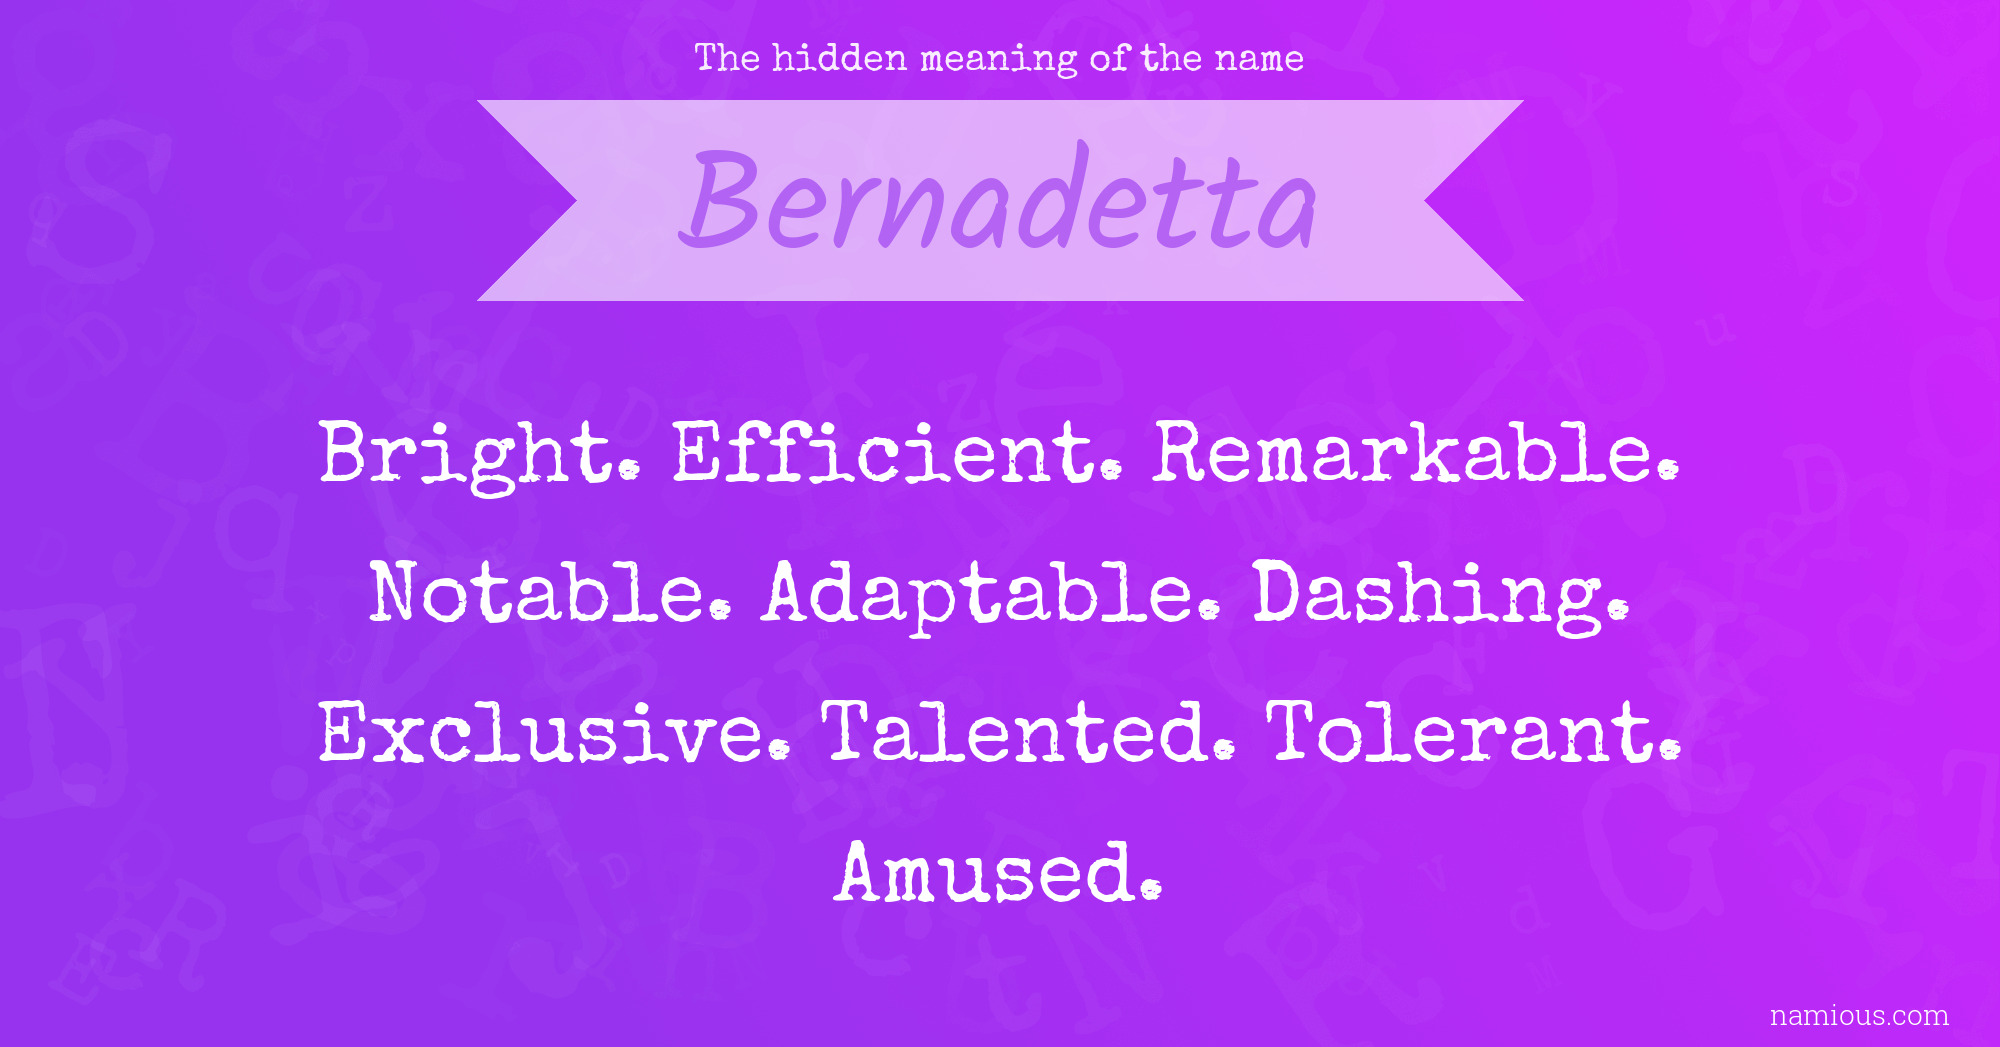 The hidden meaning of the name Bernadetta